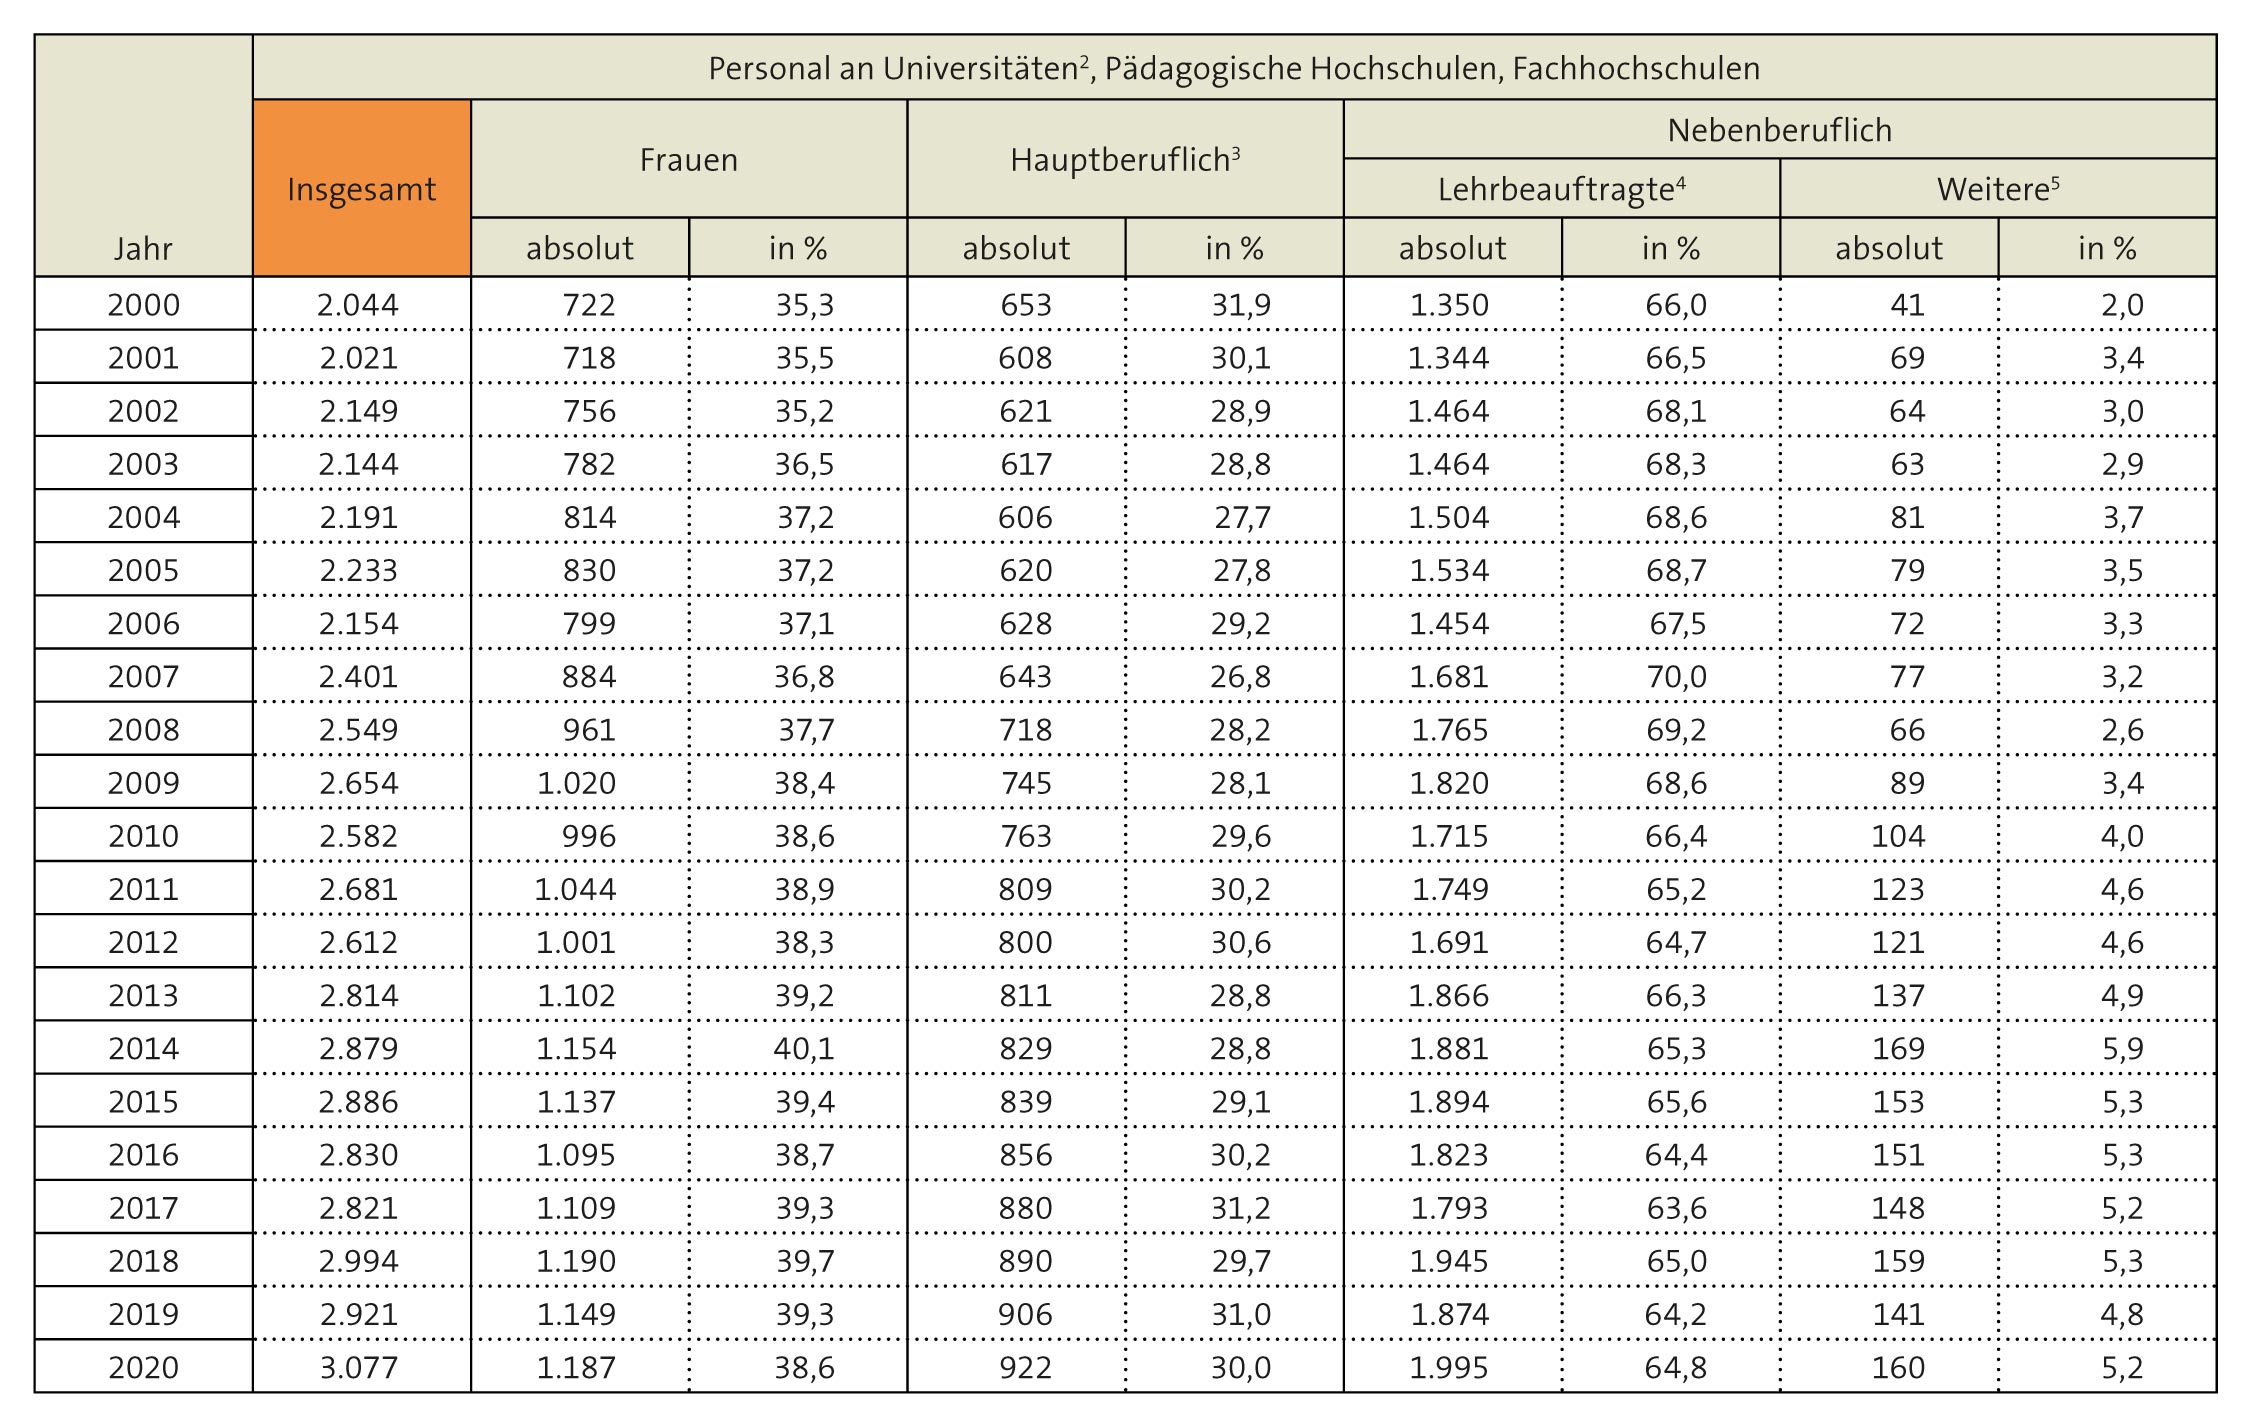 Tabelle: Personal an Universitäten, Pädagogische Hochschulen, Fachhochschulen